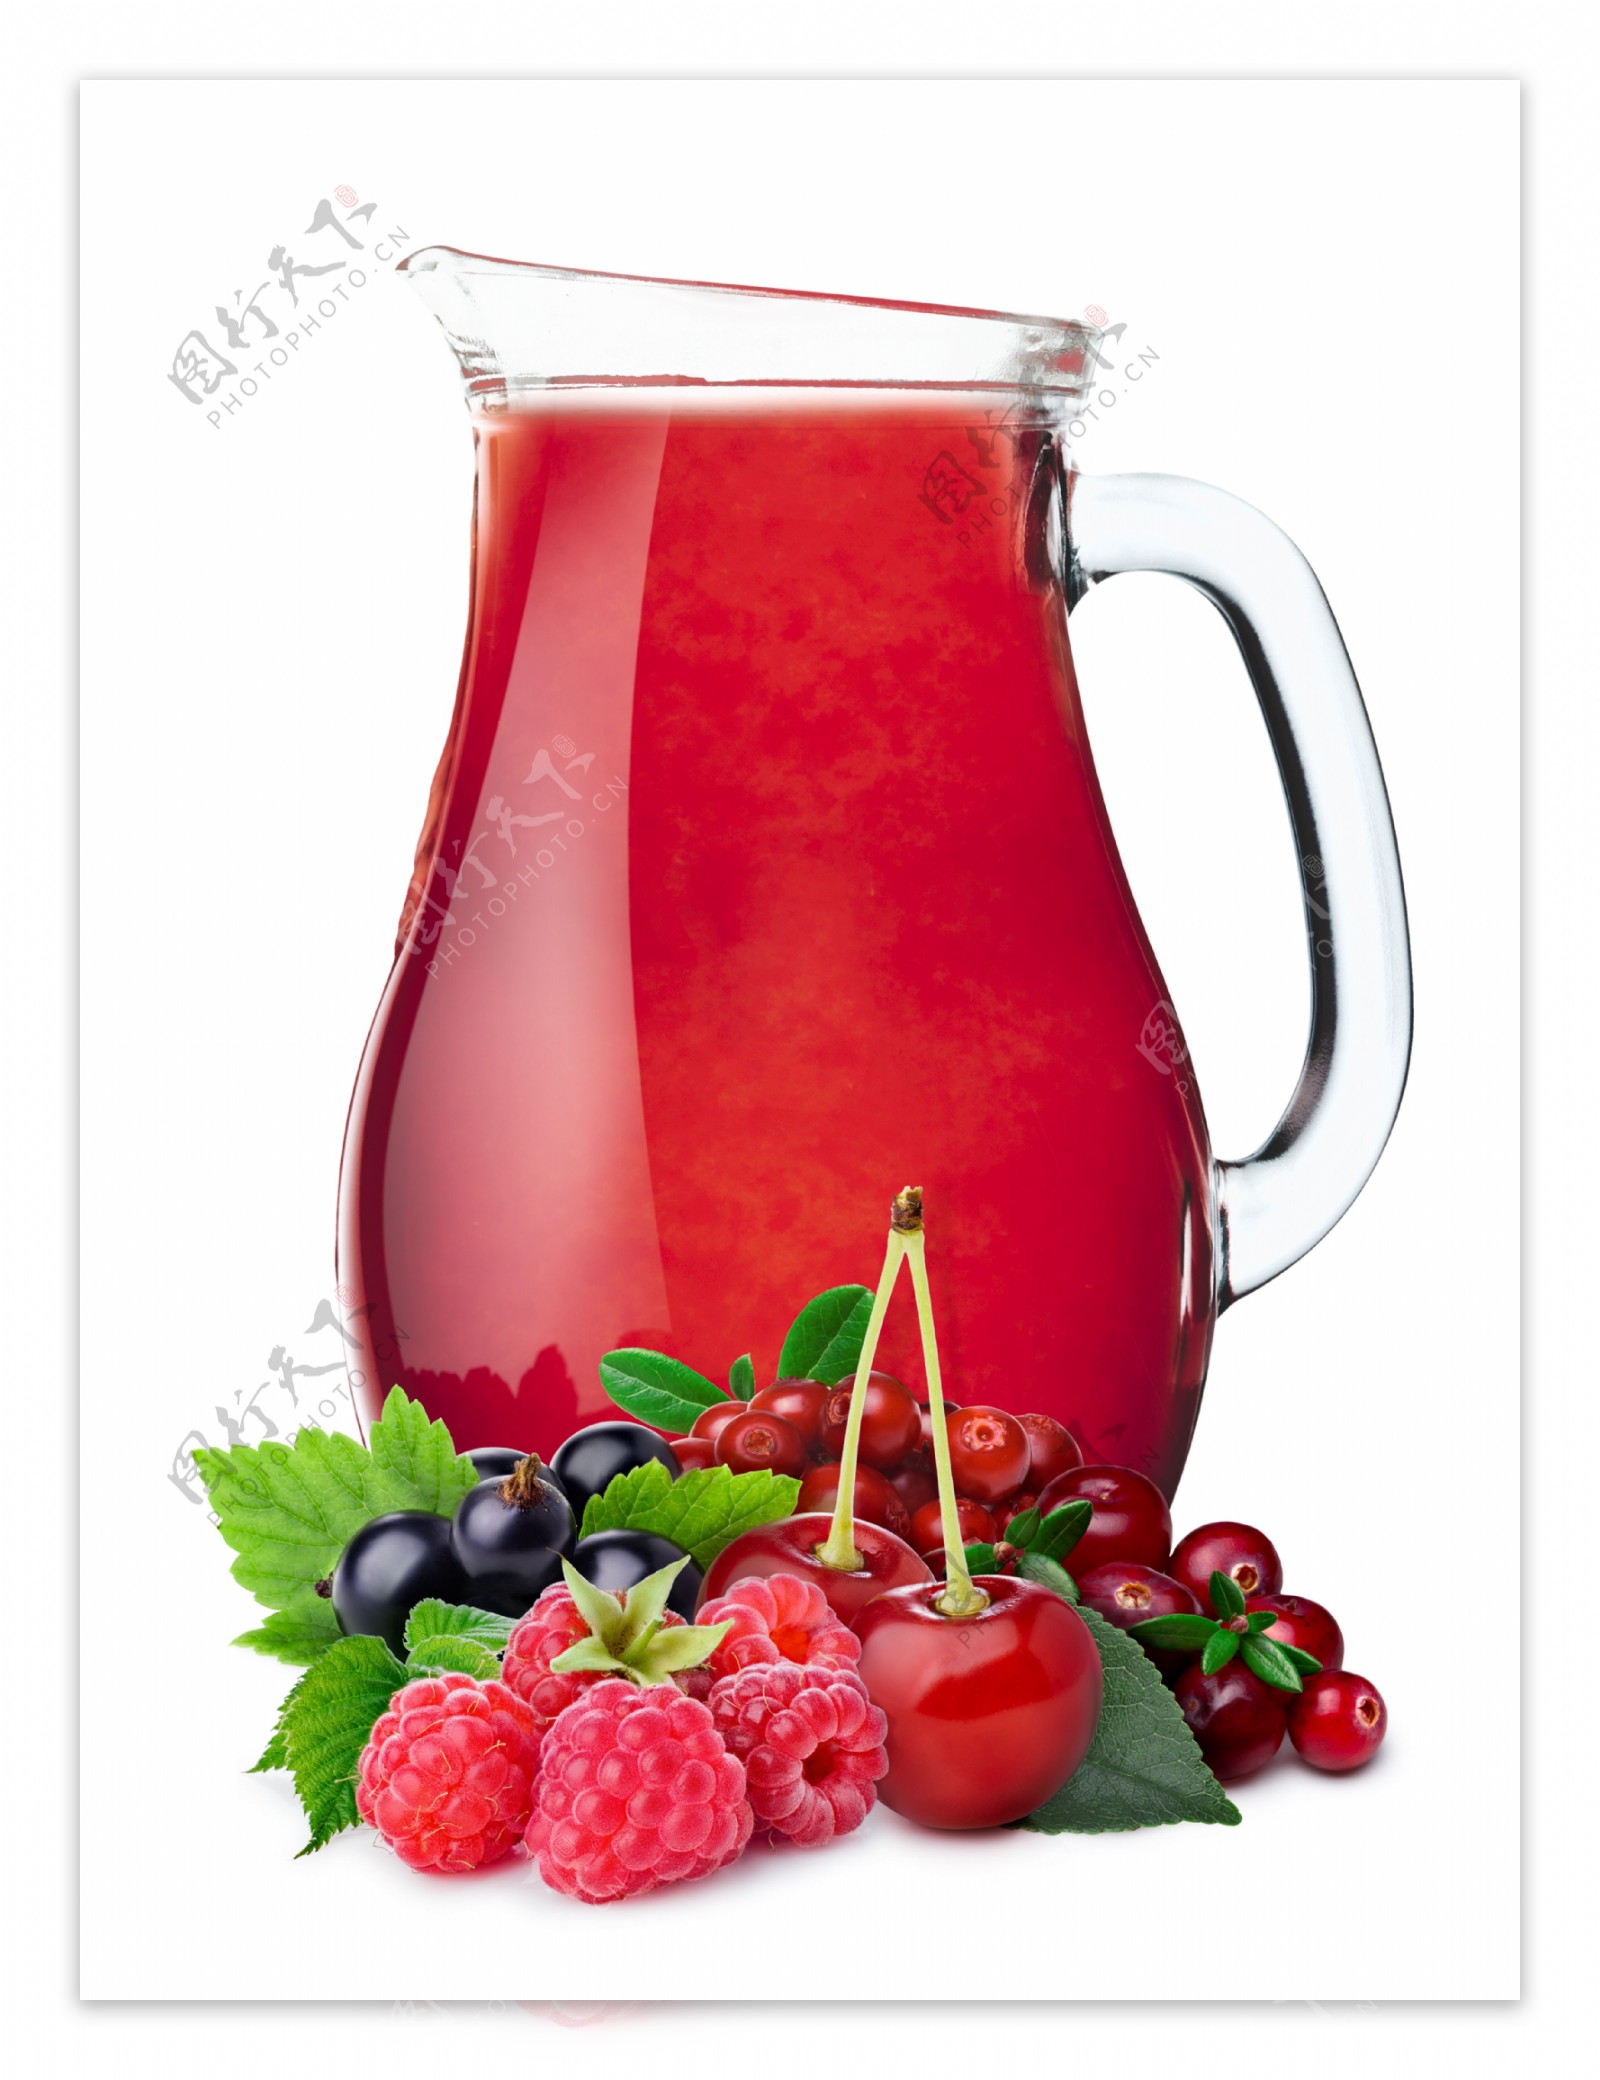 树莓汁